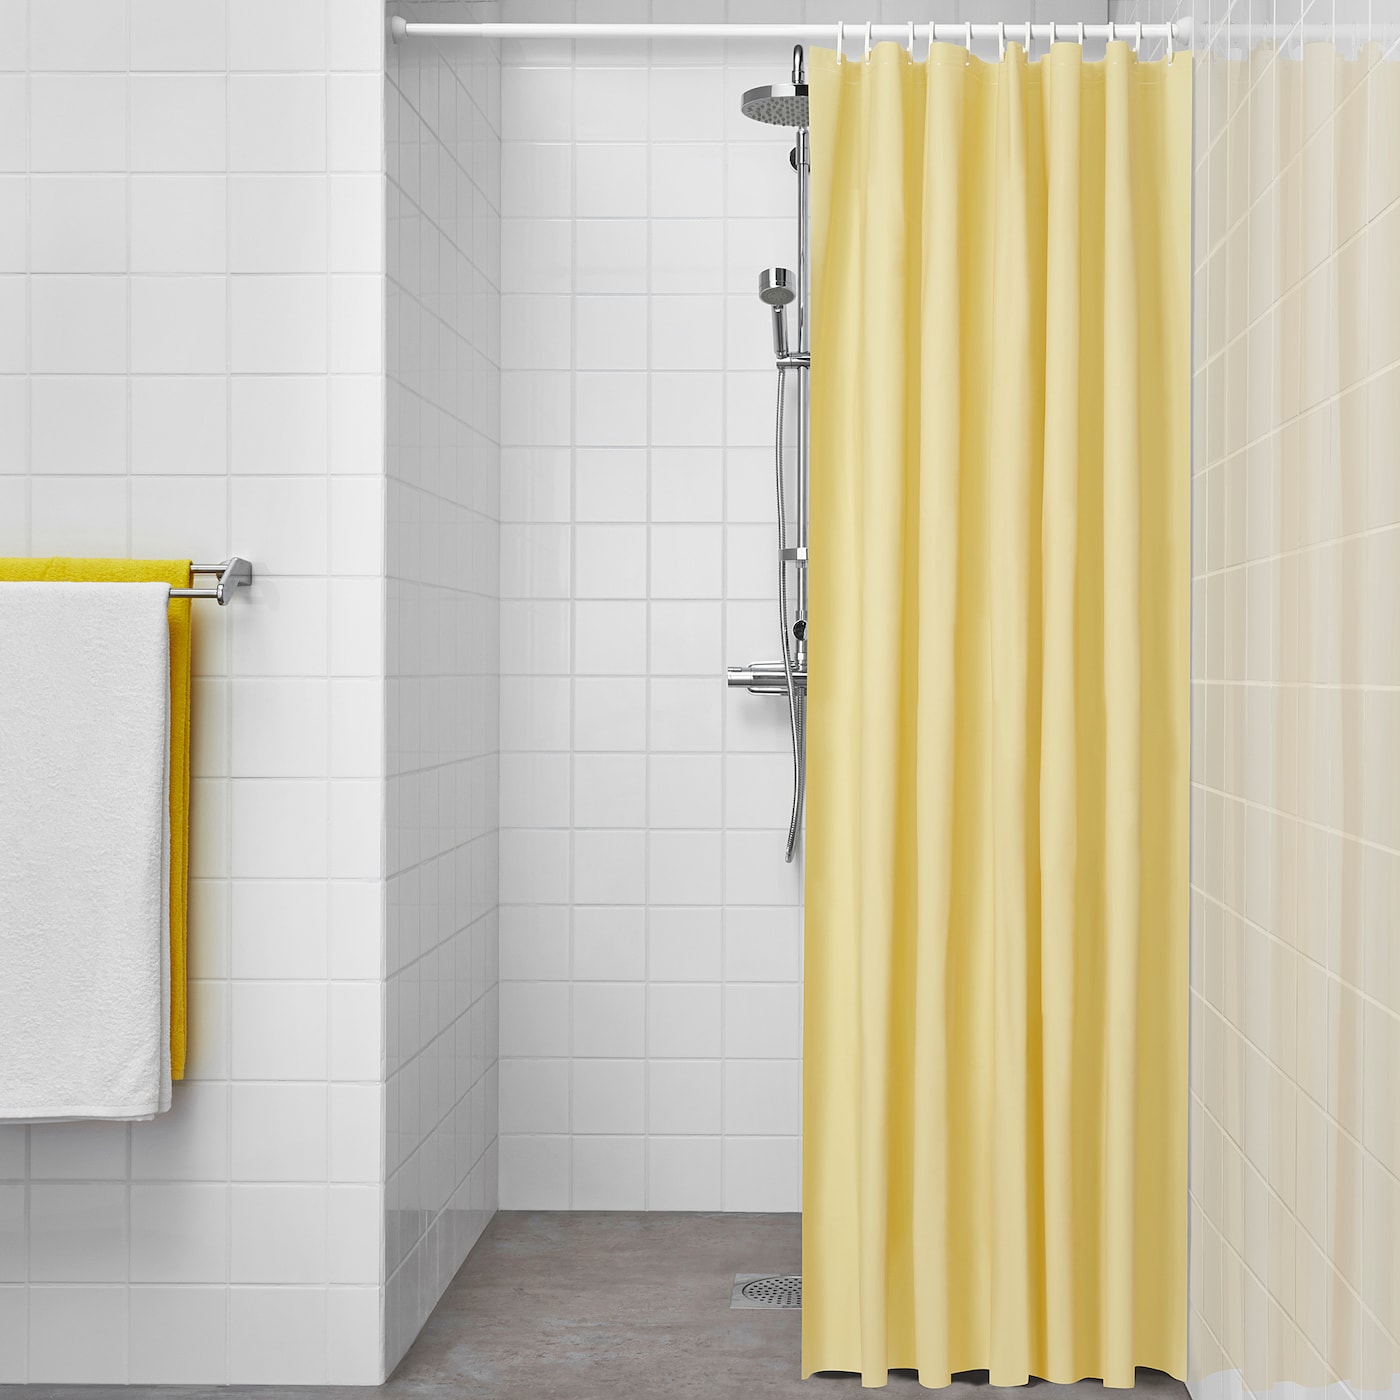 LUDDHAGTORN shower curtain light yellow - IKEA